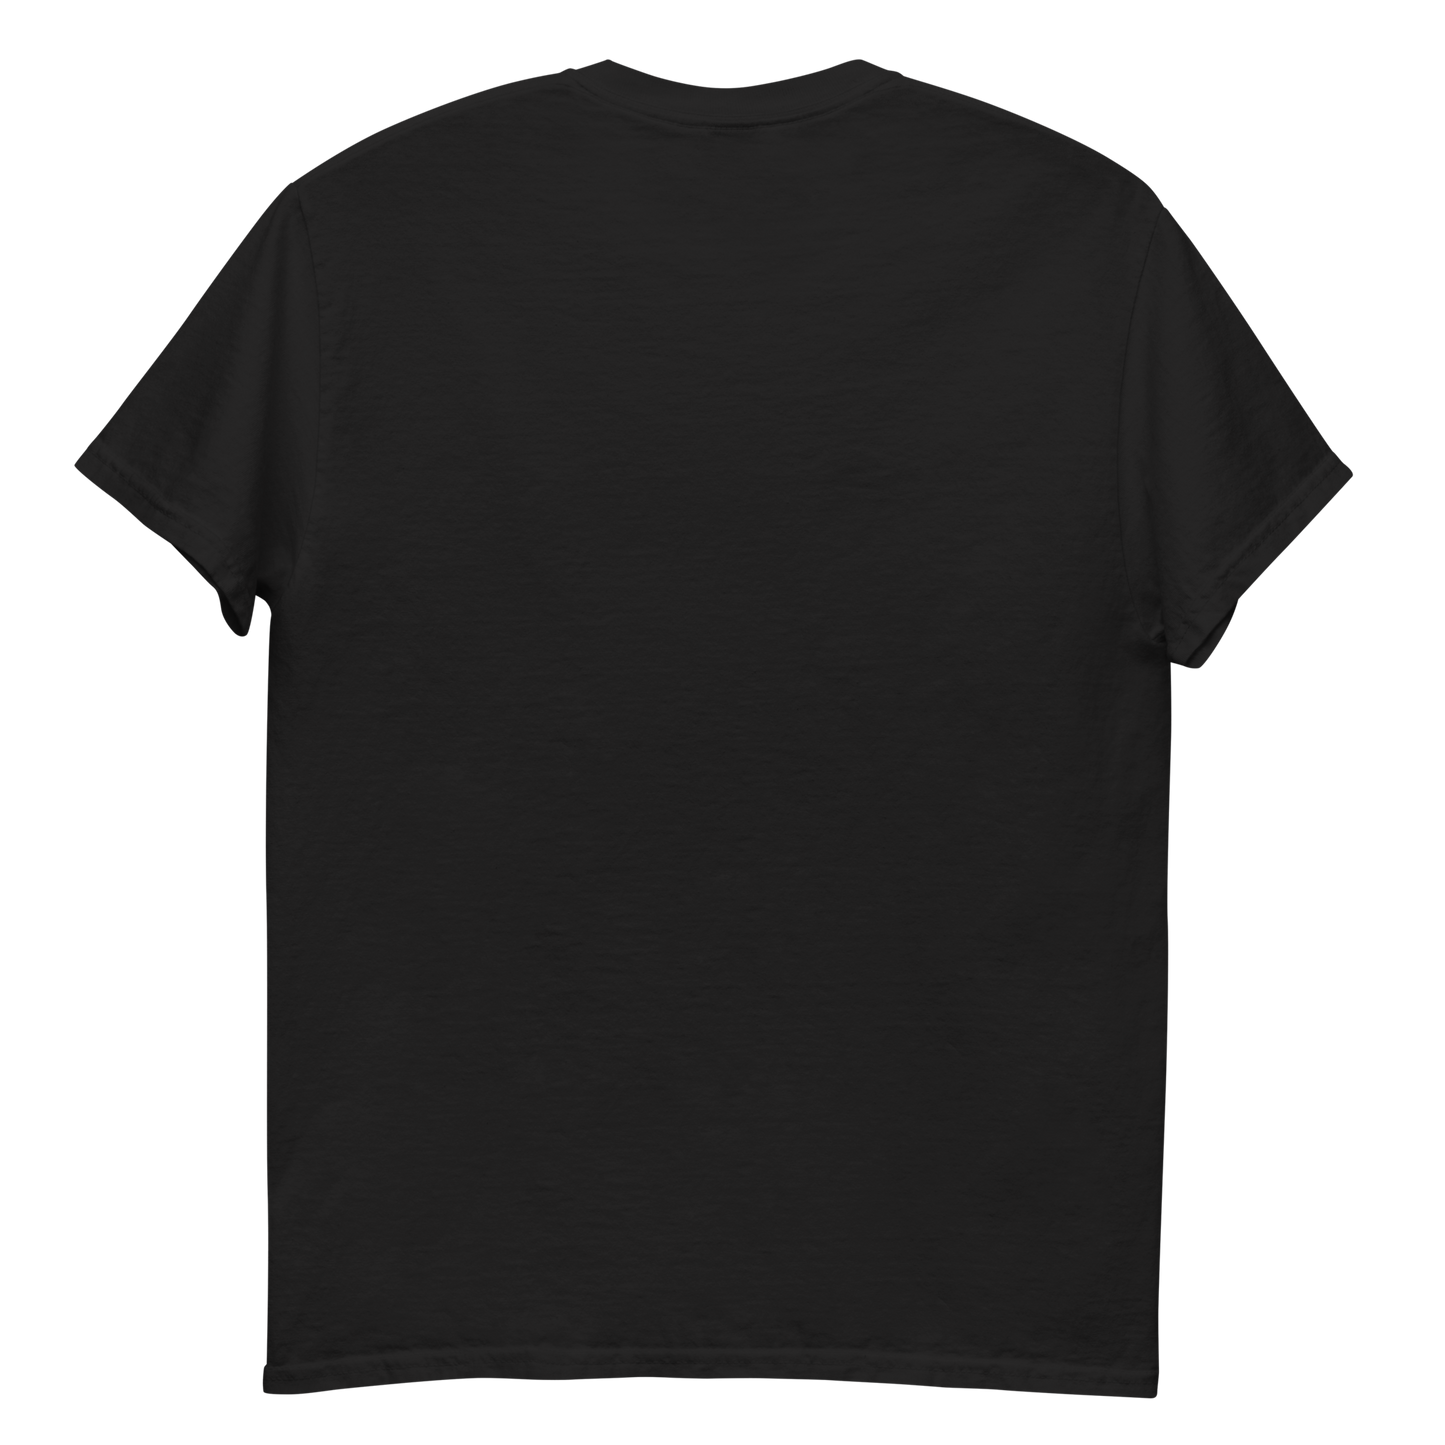 I Deserve More #2 - Collectible T-Shirt - Based off the original 1/1 Solana NFT Print